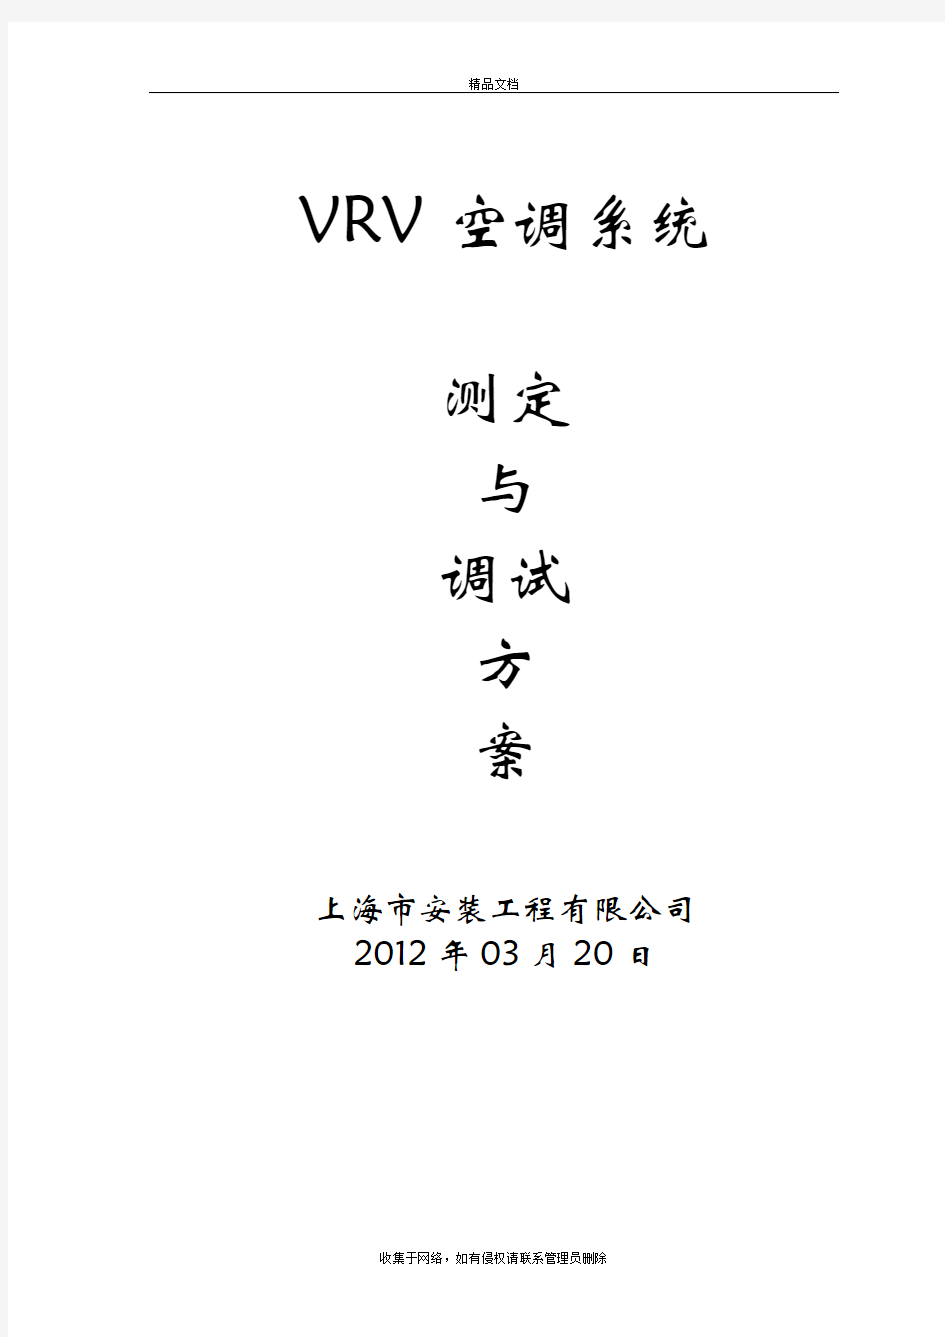 VRV空调系统调试方案知识分享